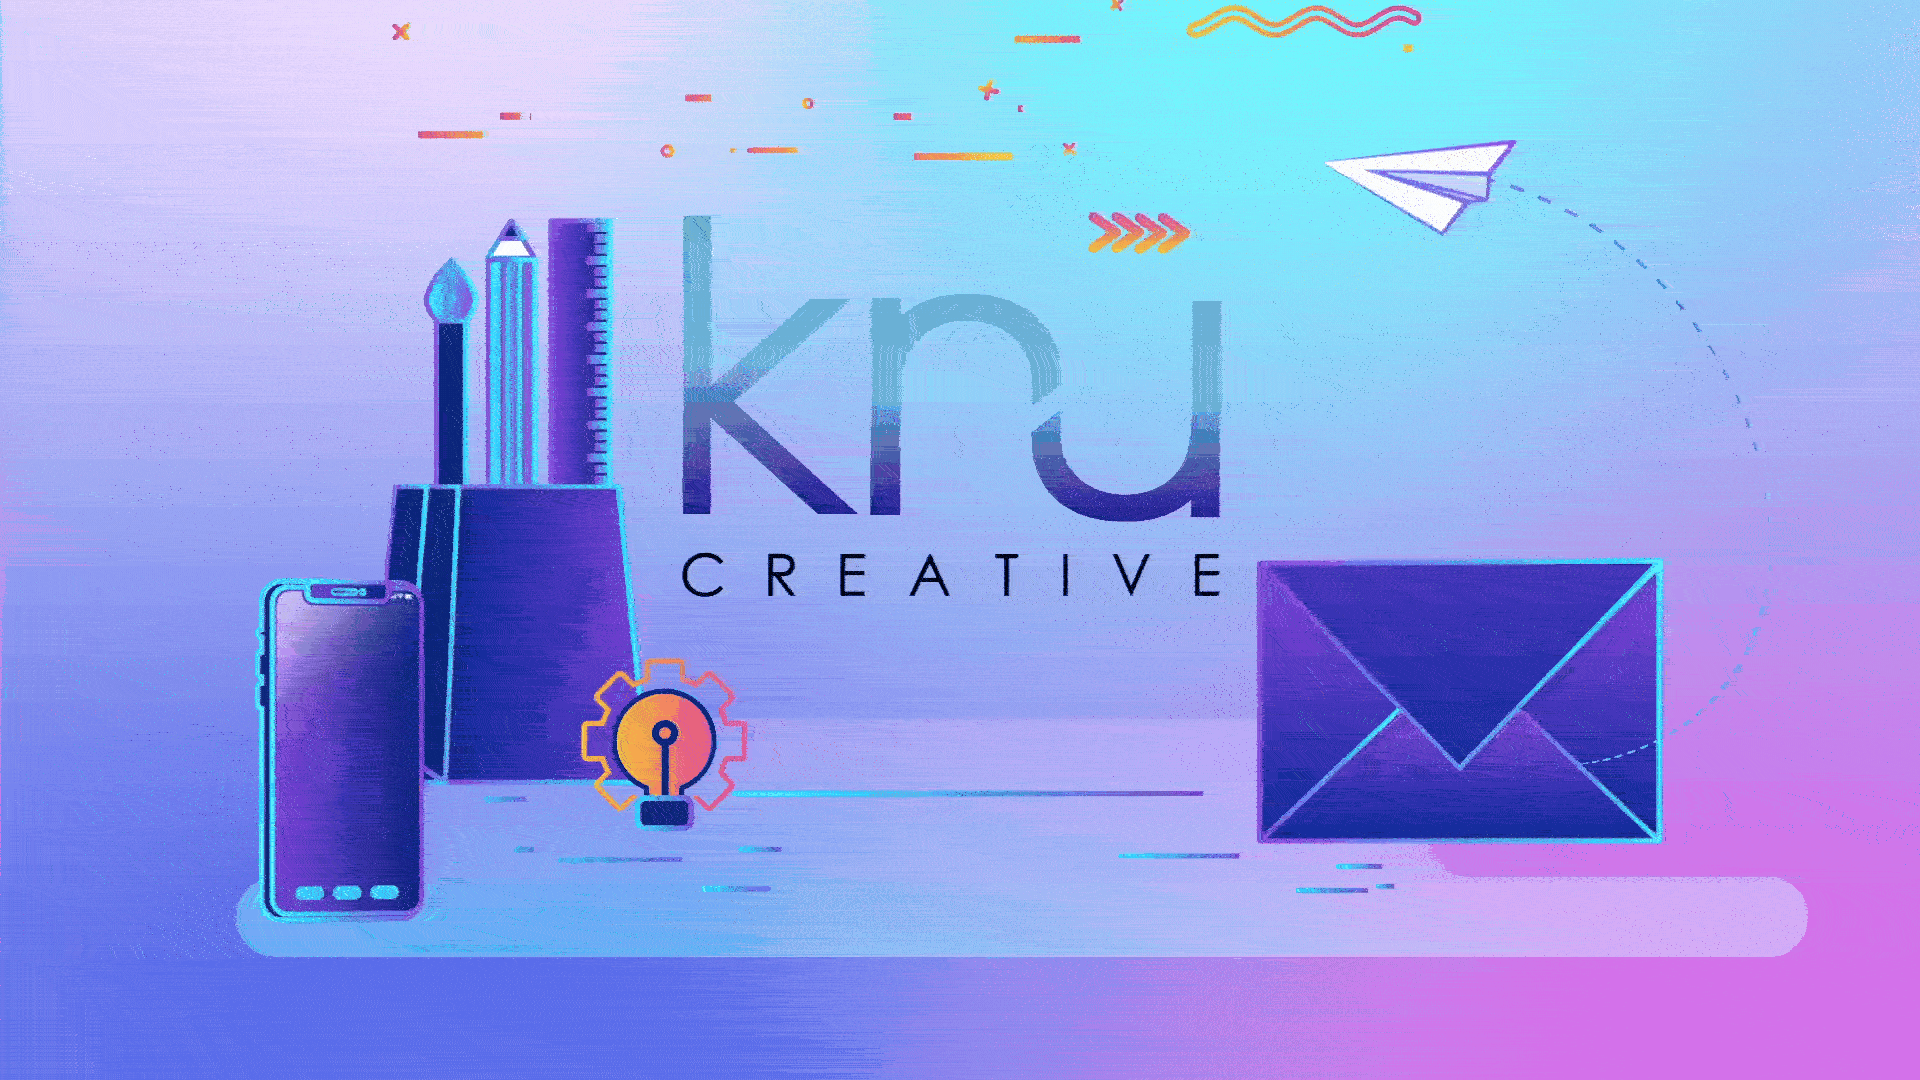 Design image for Kru creative.